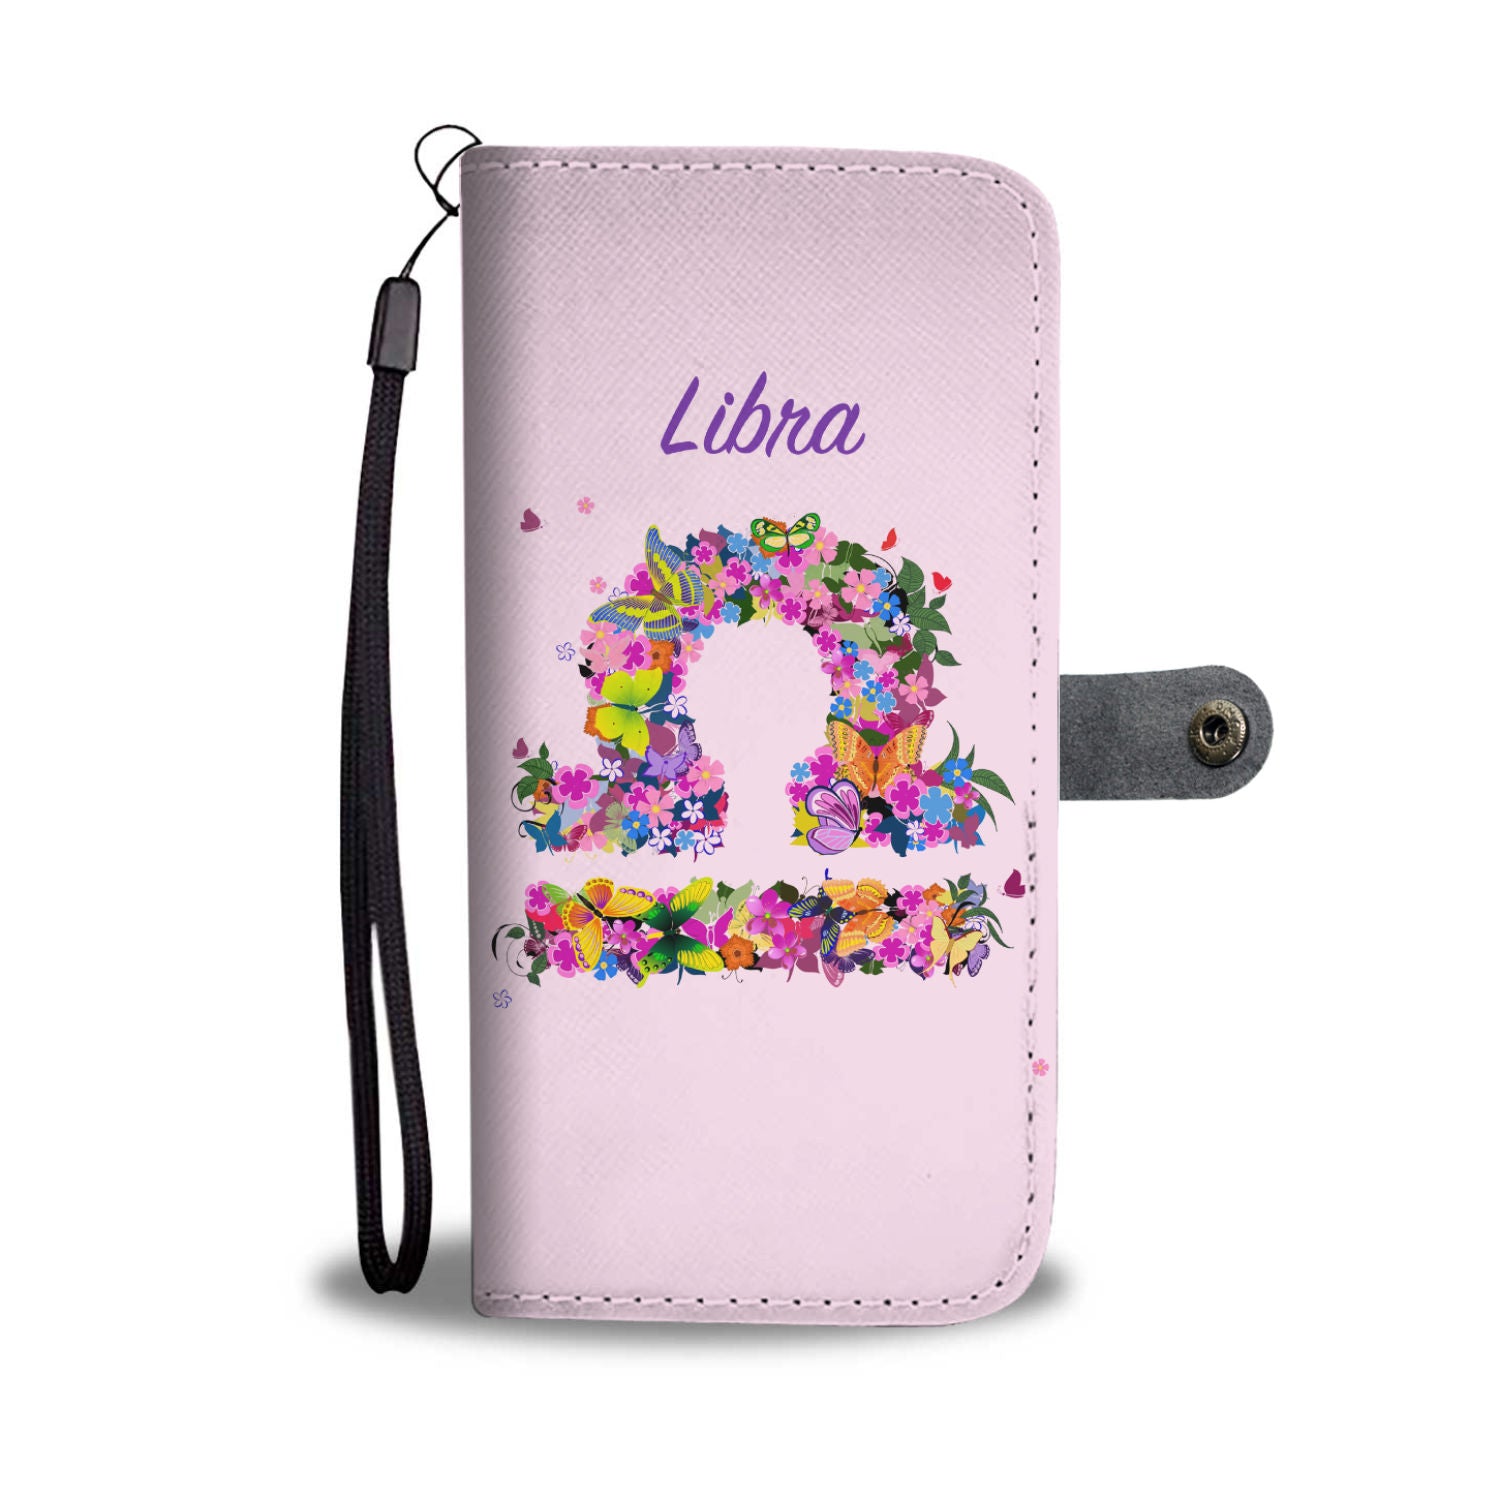 Libra Floral Phone Wallet